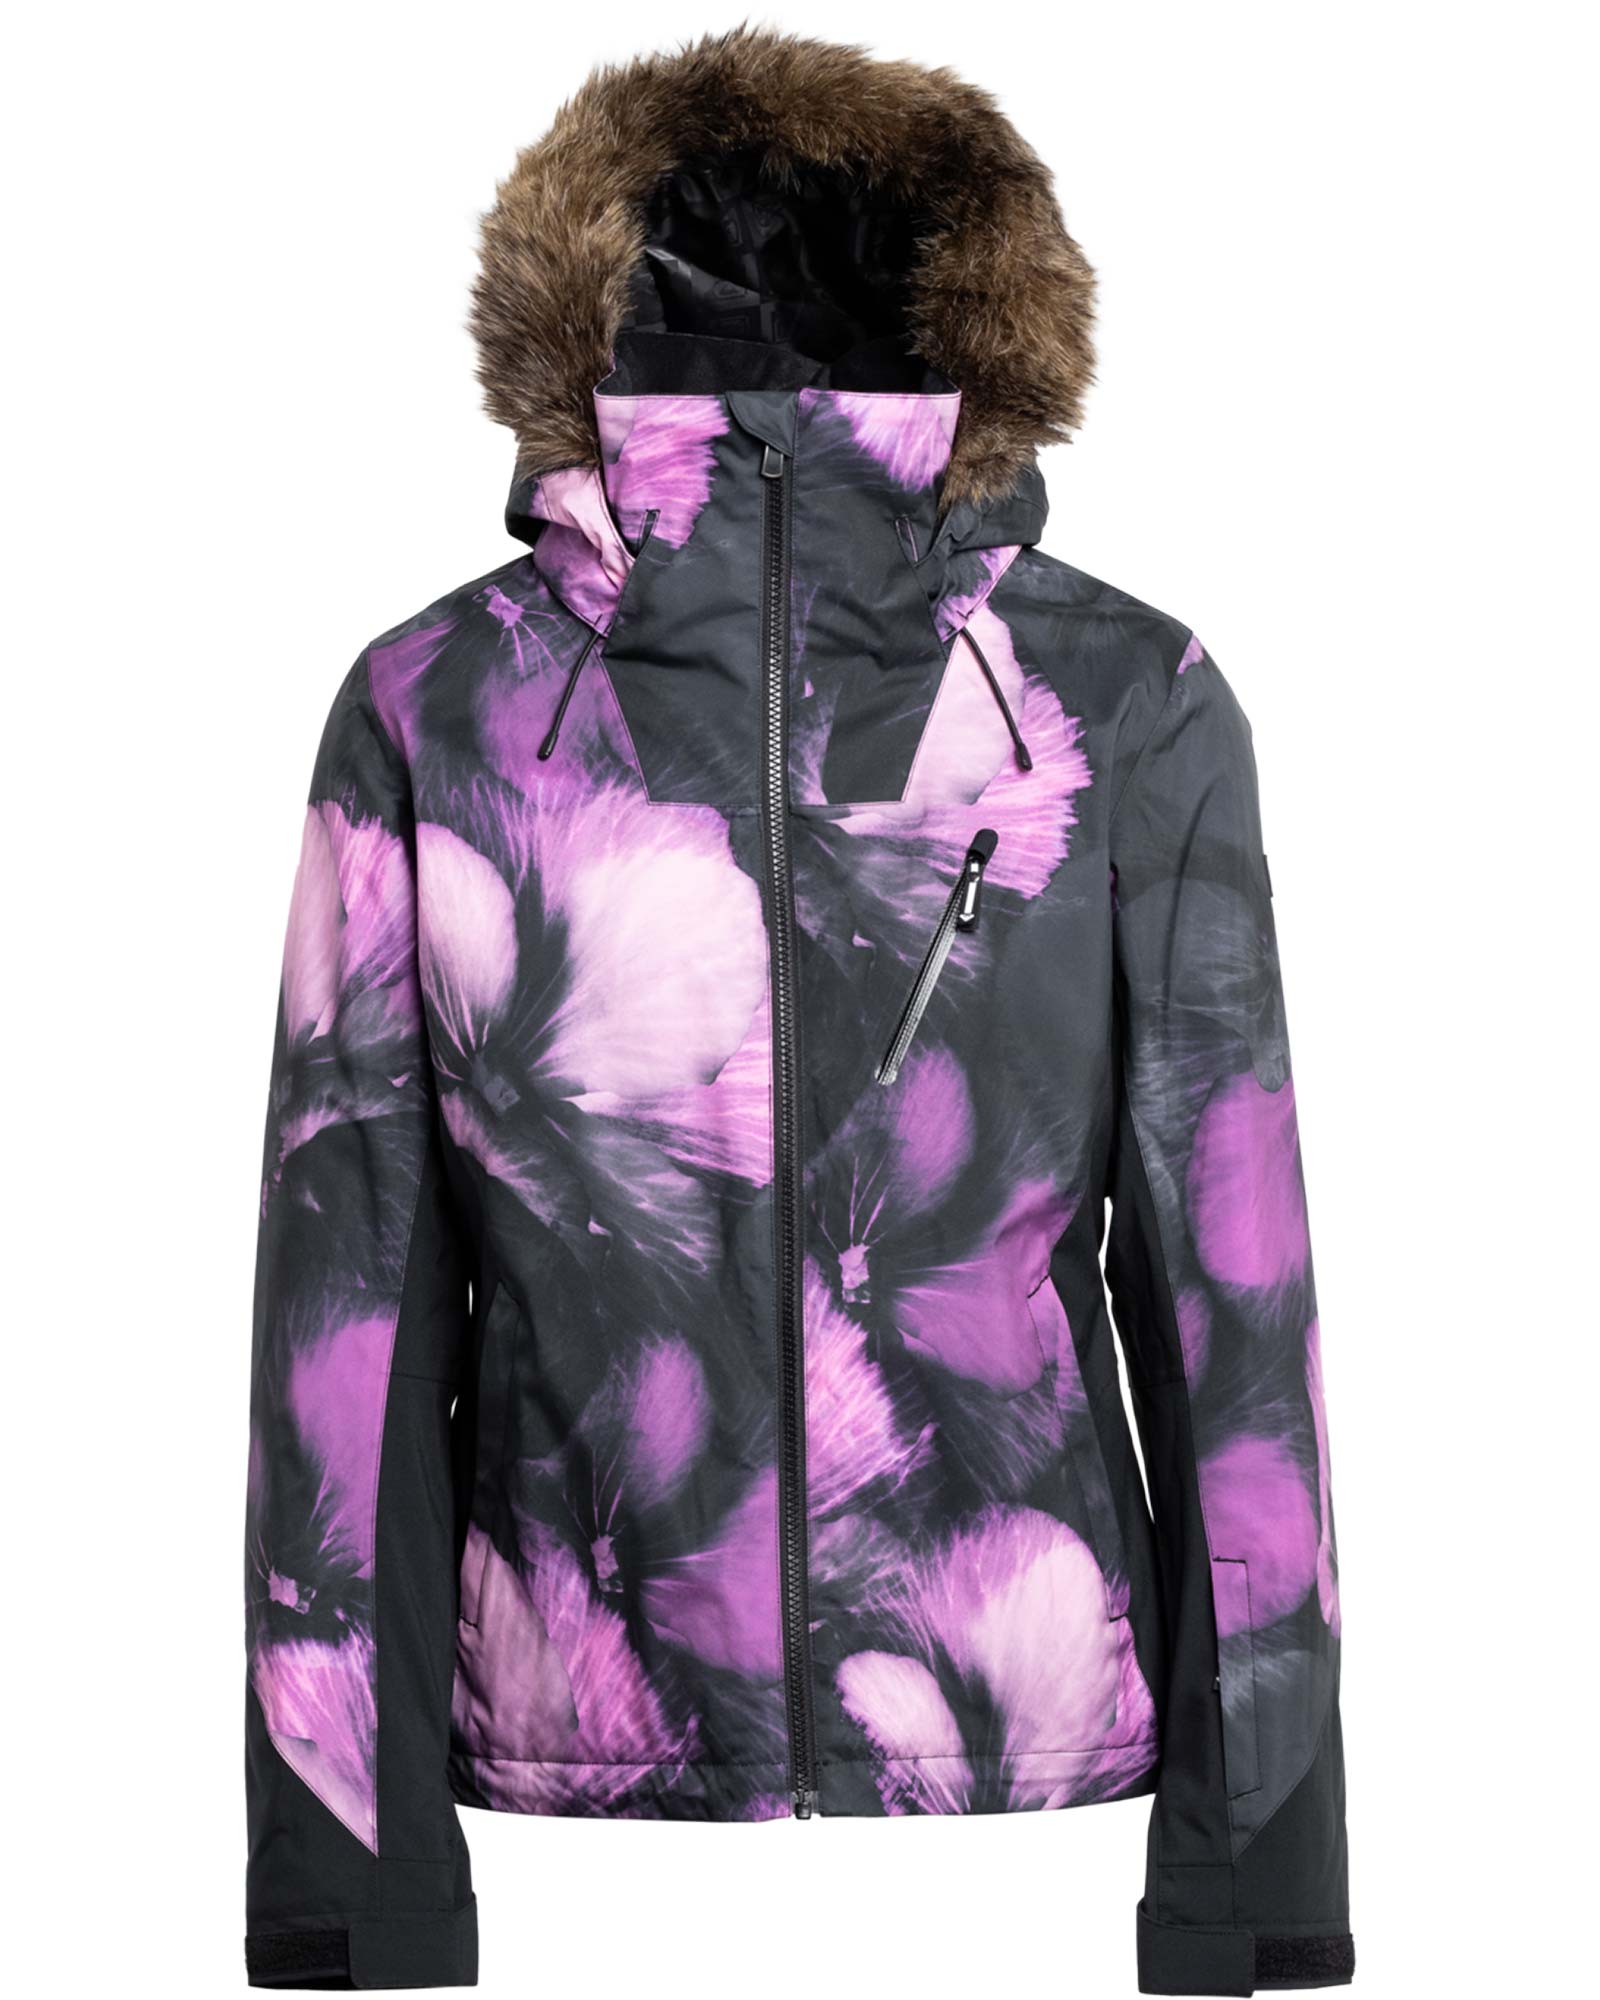 Roxy Jet Ski Premium Women’s Jacket - True Black Pansy Print M